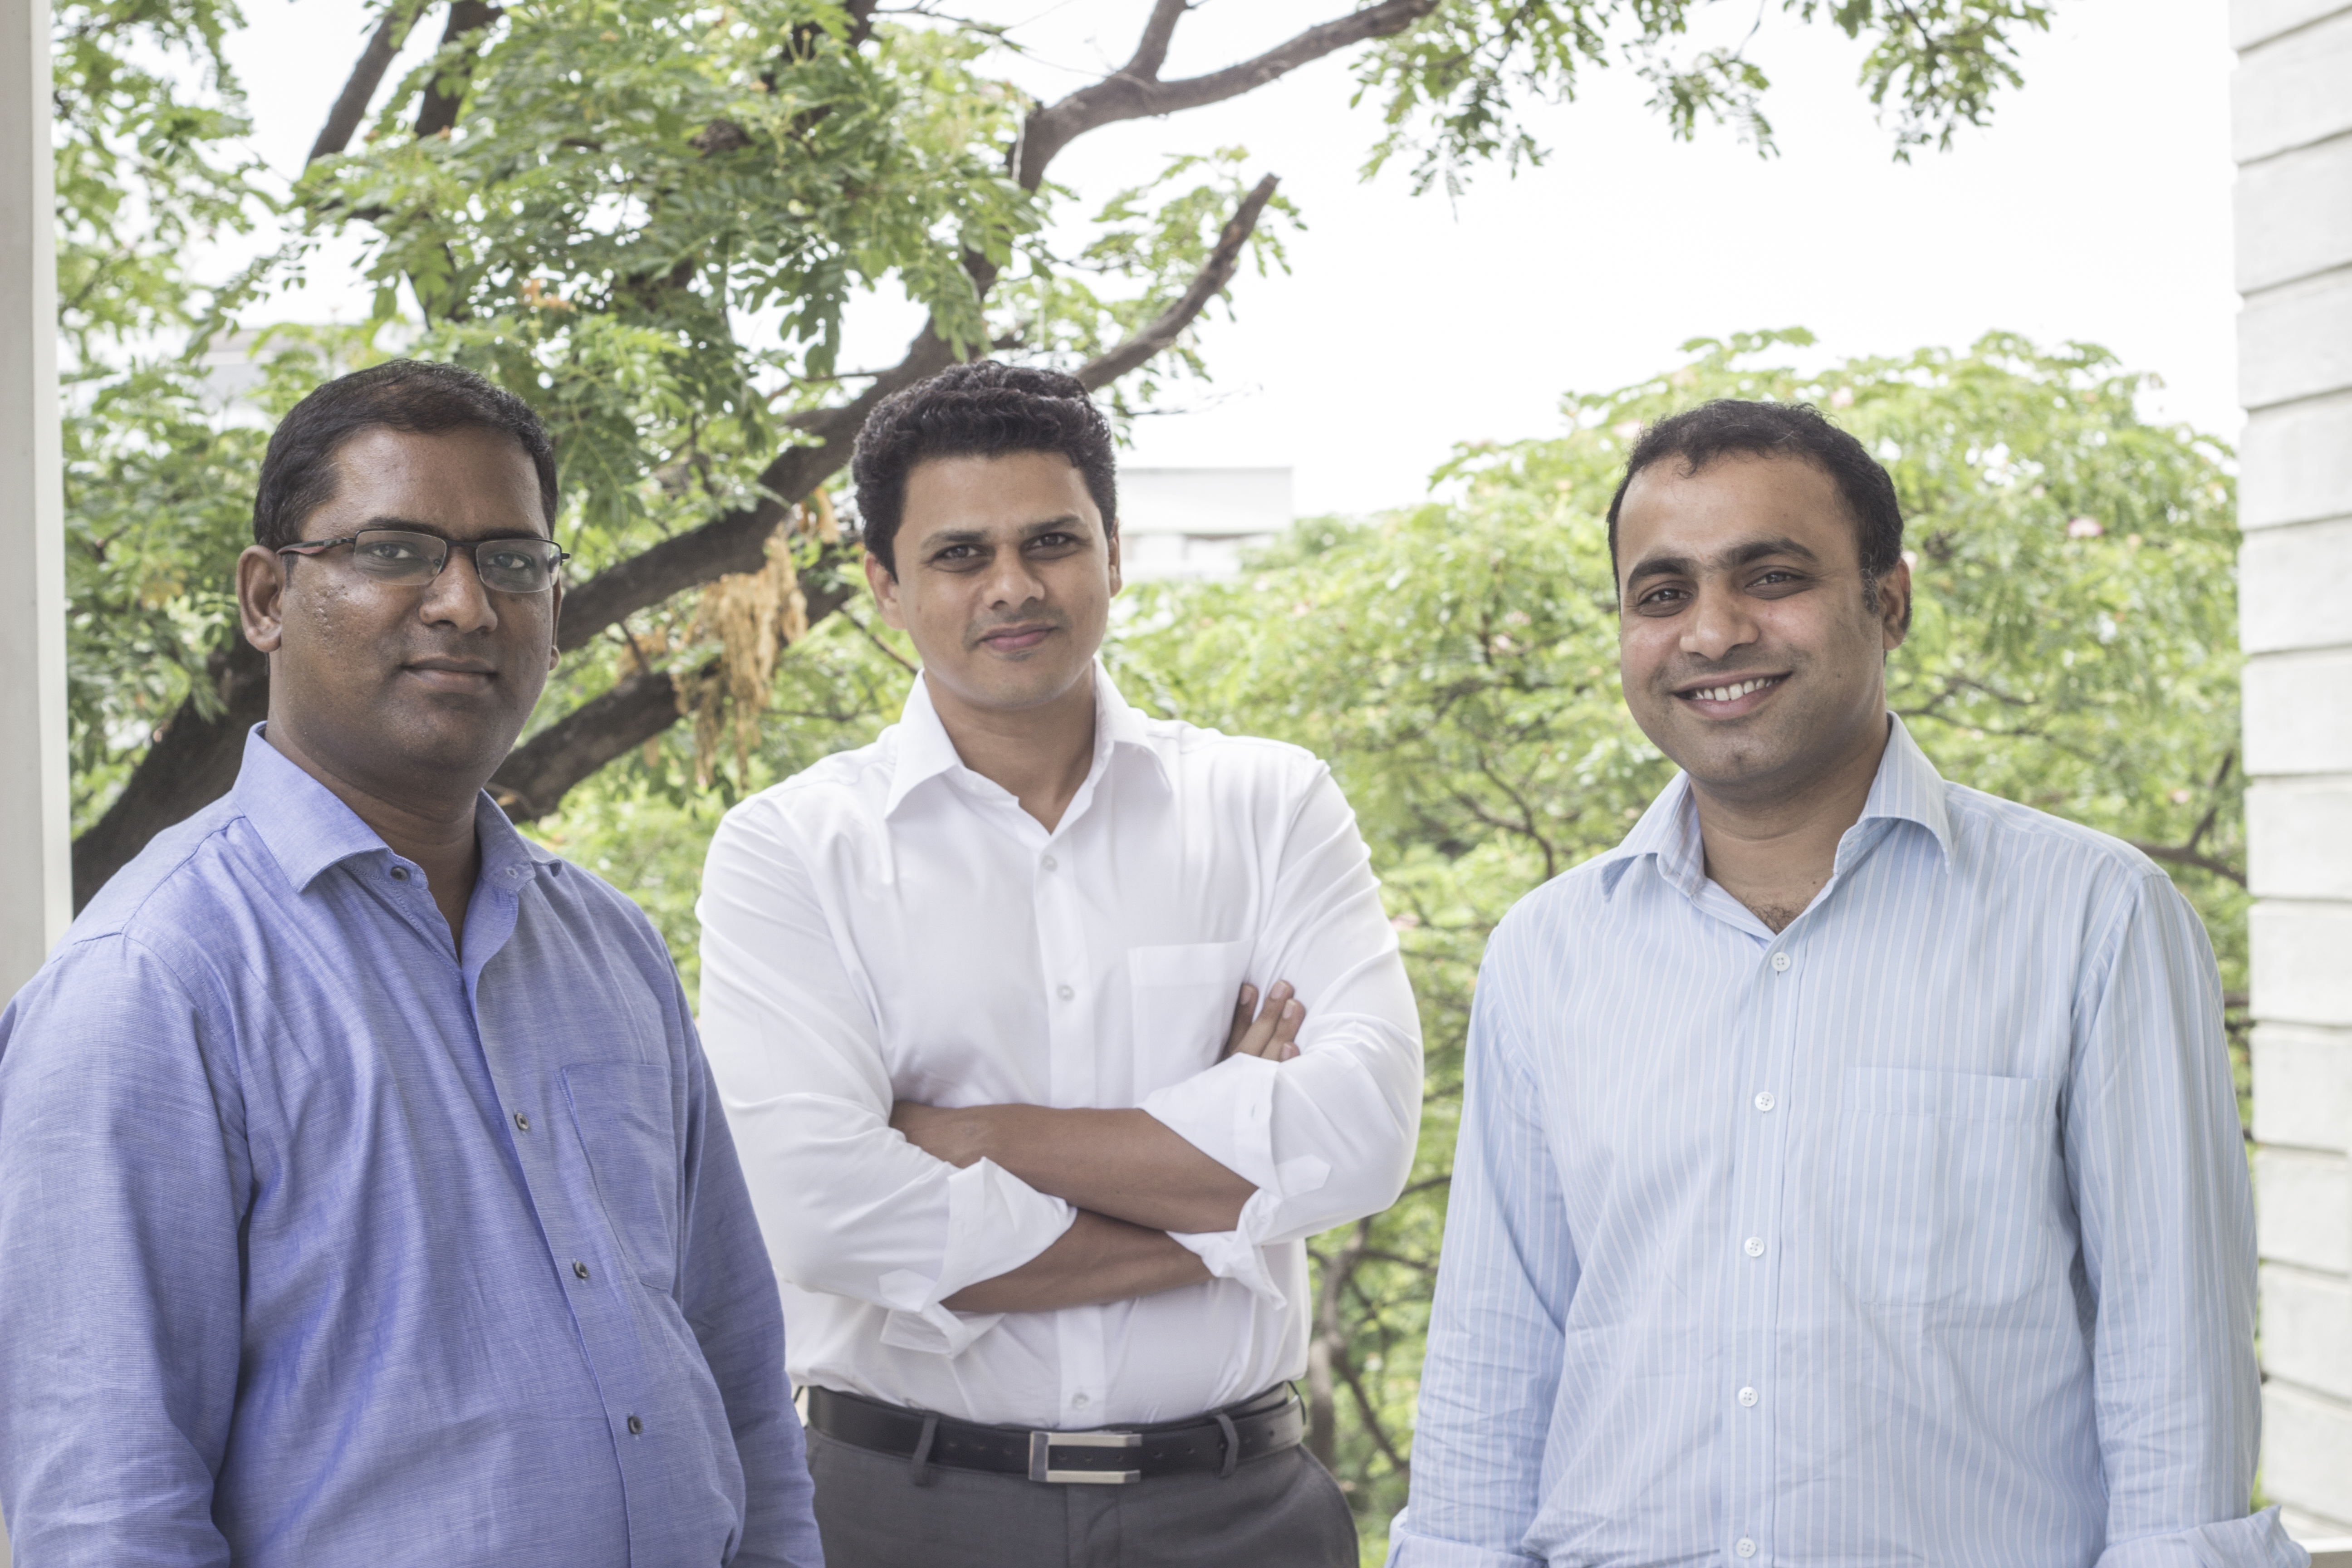 The Founders (from left): Kishore Balakrishna, Sekhar Sandhu & Vinod